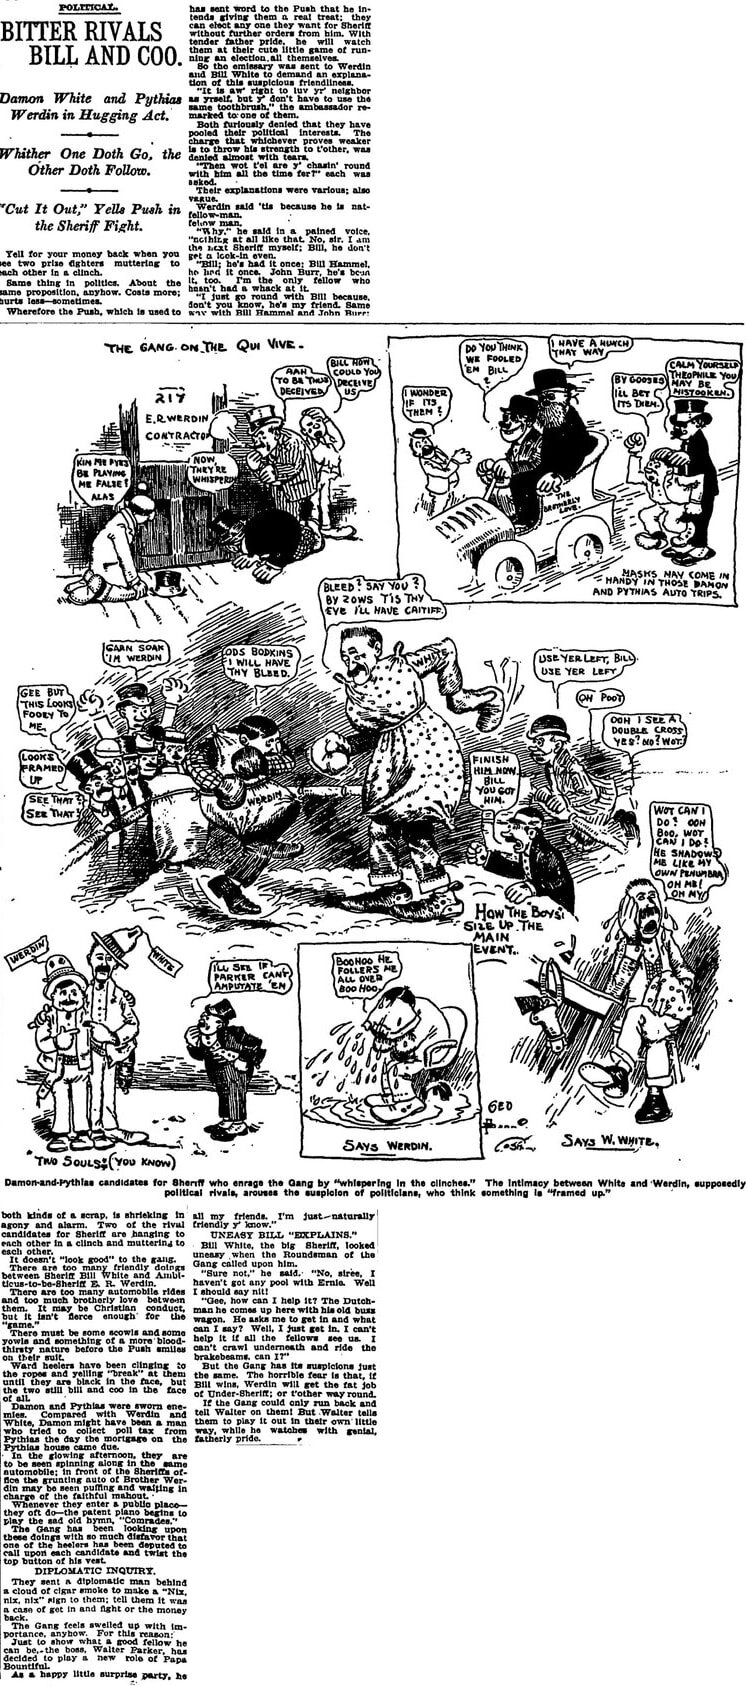 Los-Angeles-Times-February-10-1906-opt.jpg